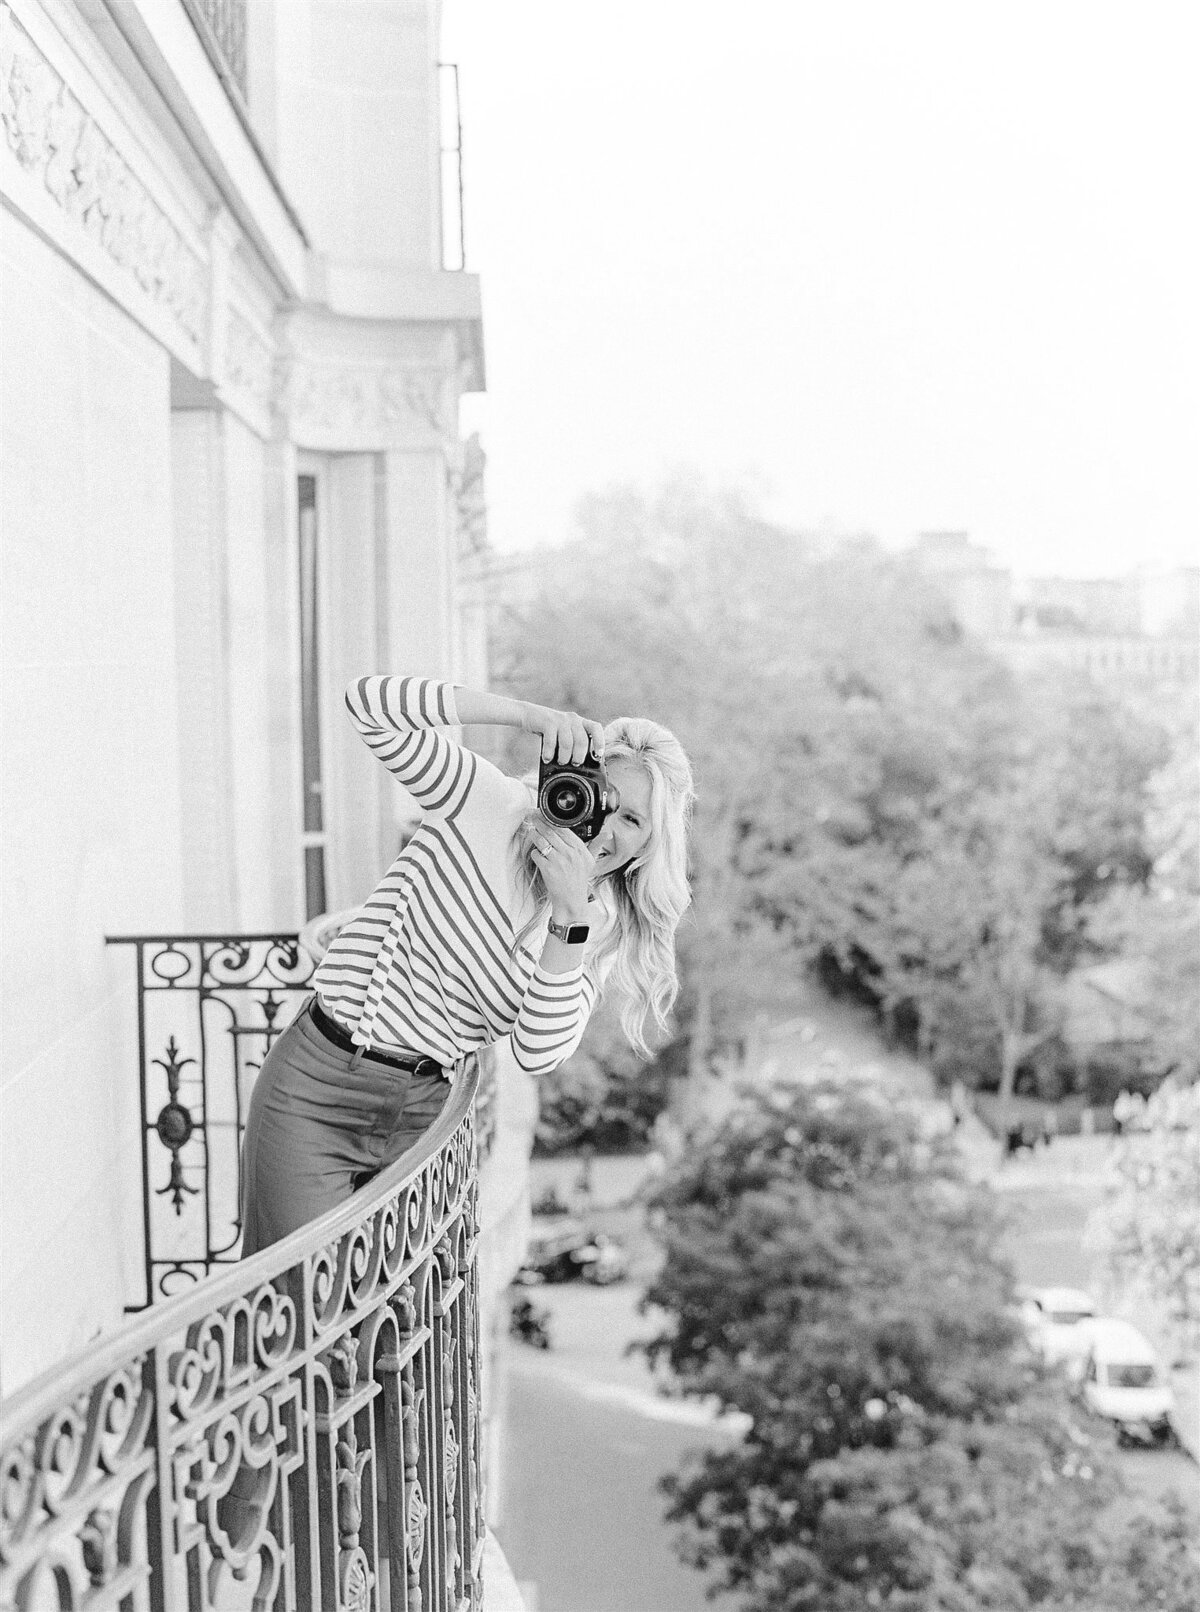 Paris April 2019 - 102-Black and white